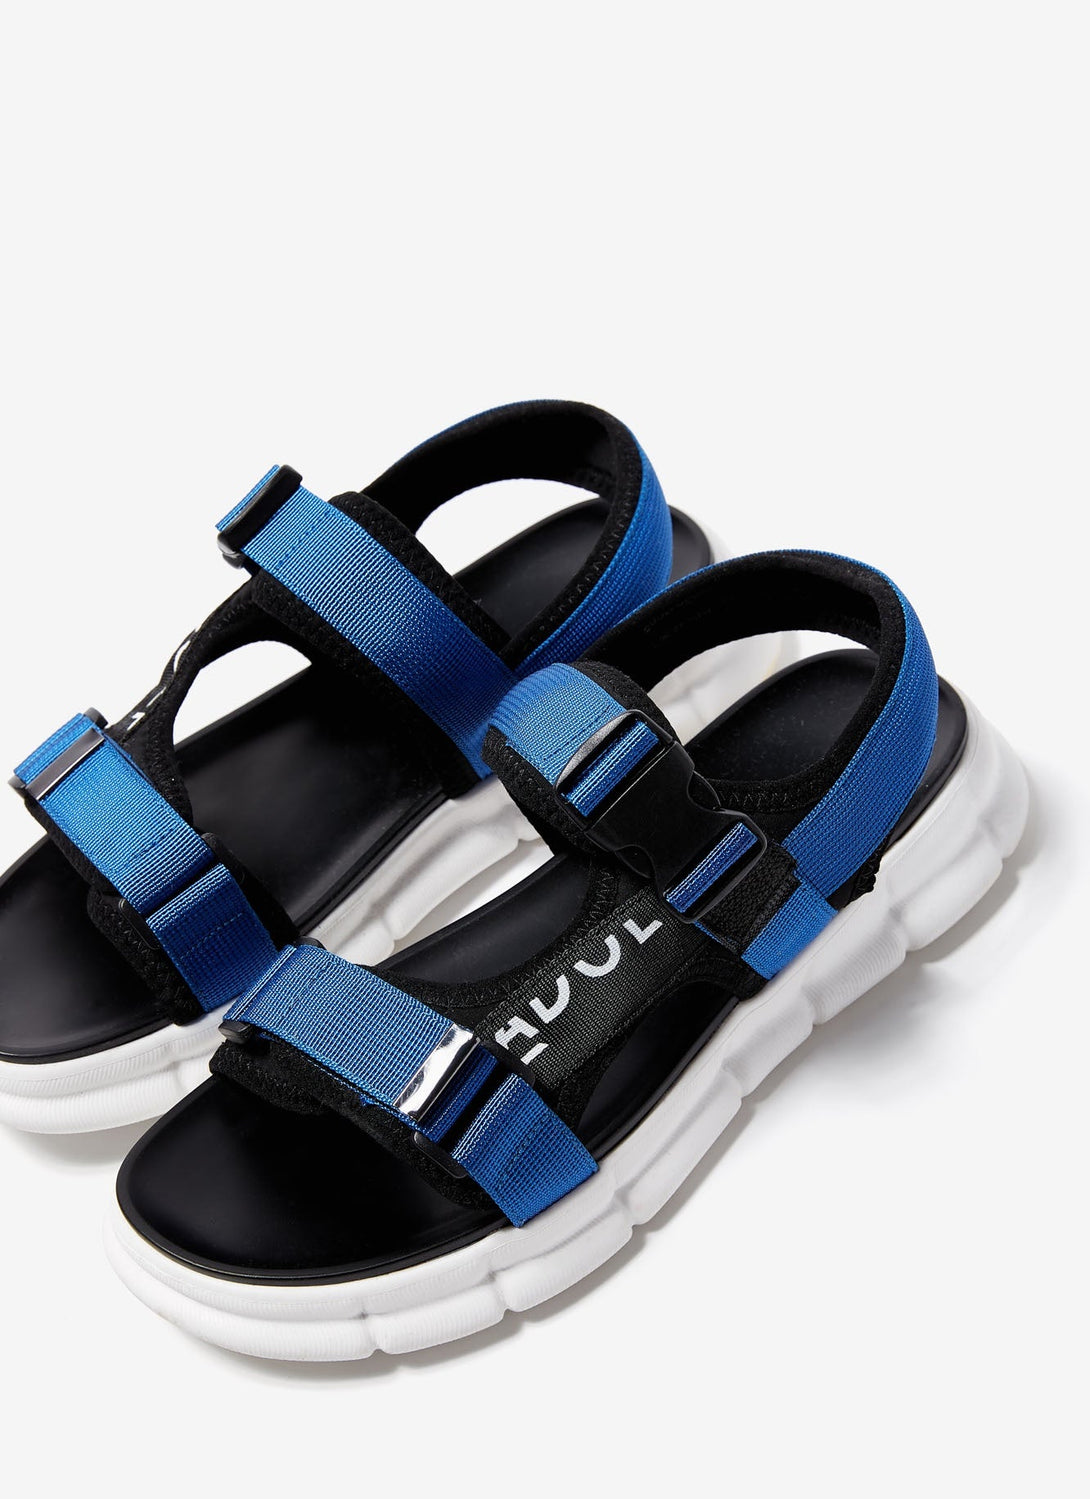 Men Shoes | Blue Mallard Sport Sandals With Adjustable Straps by Spanish designer Adolfo Dominguez